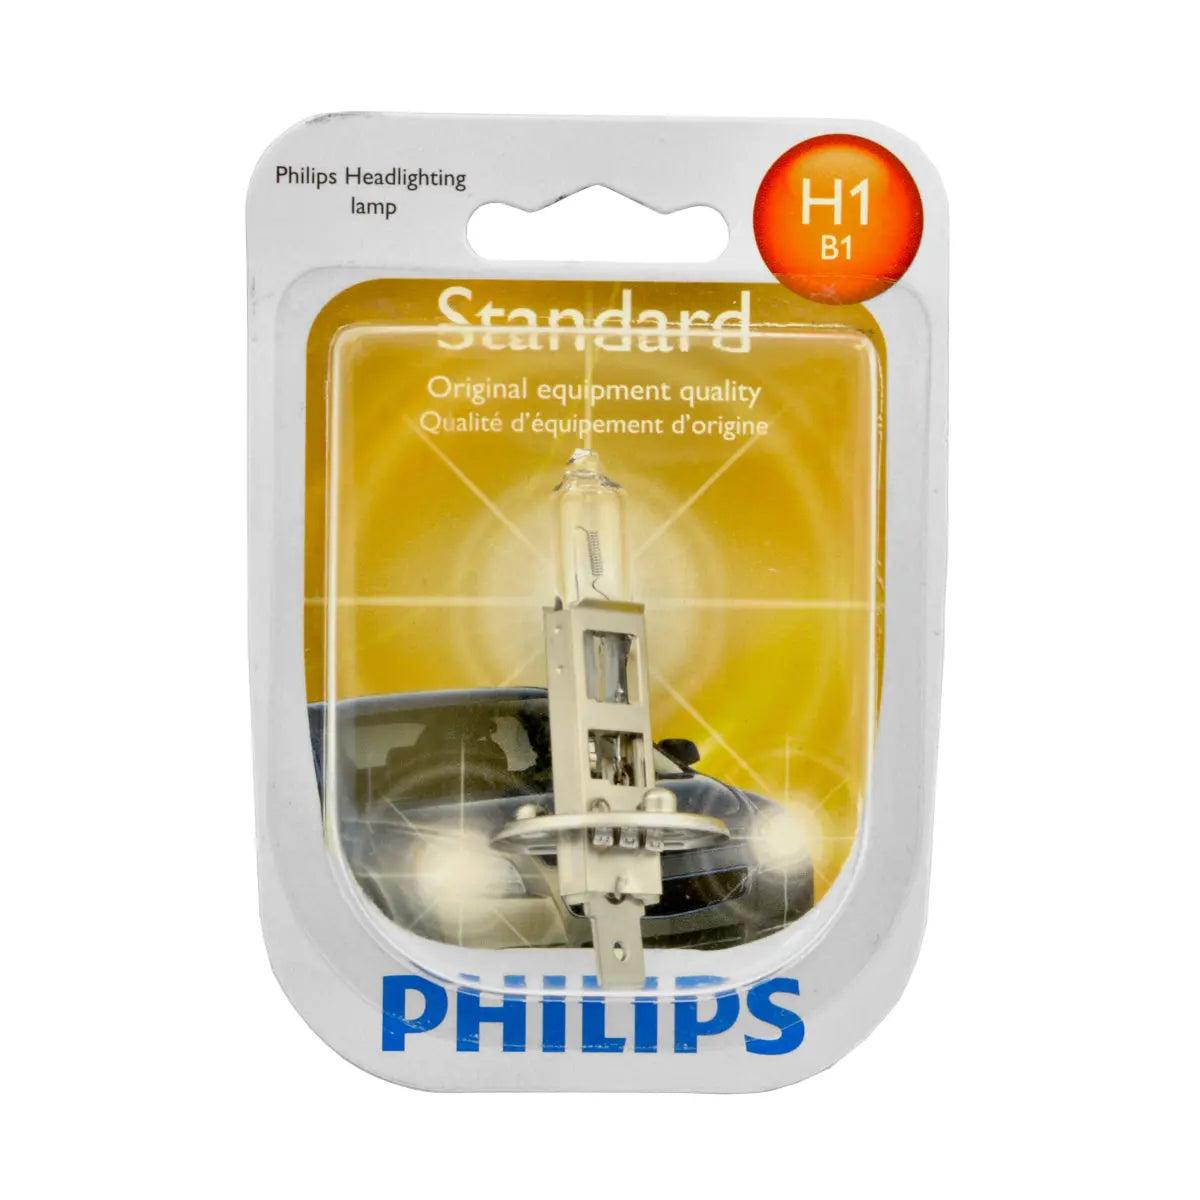 Philips 12258B1 H1 Standard Halogen Replacement Headlight Bulb